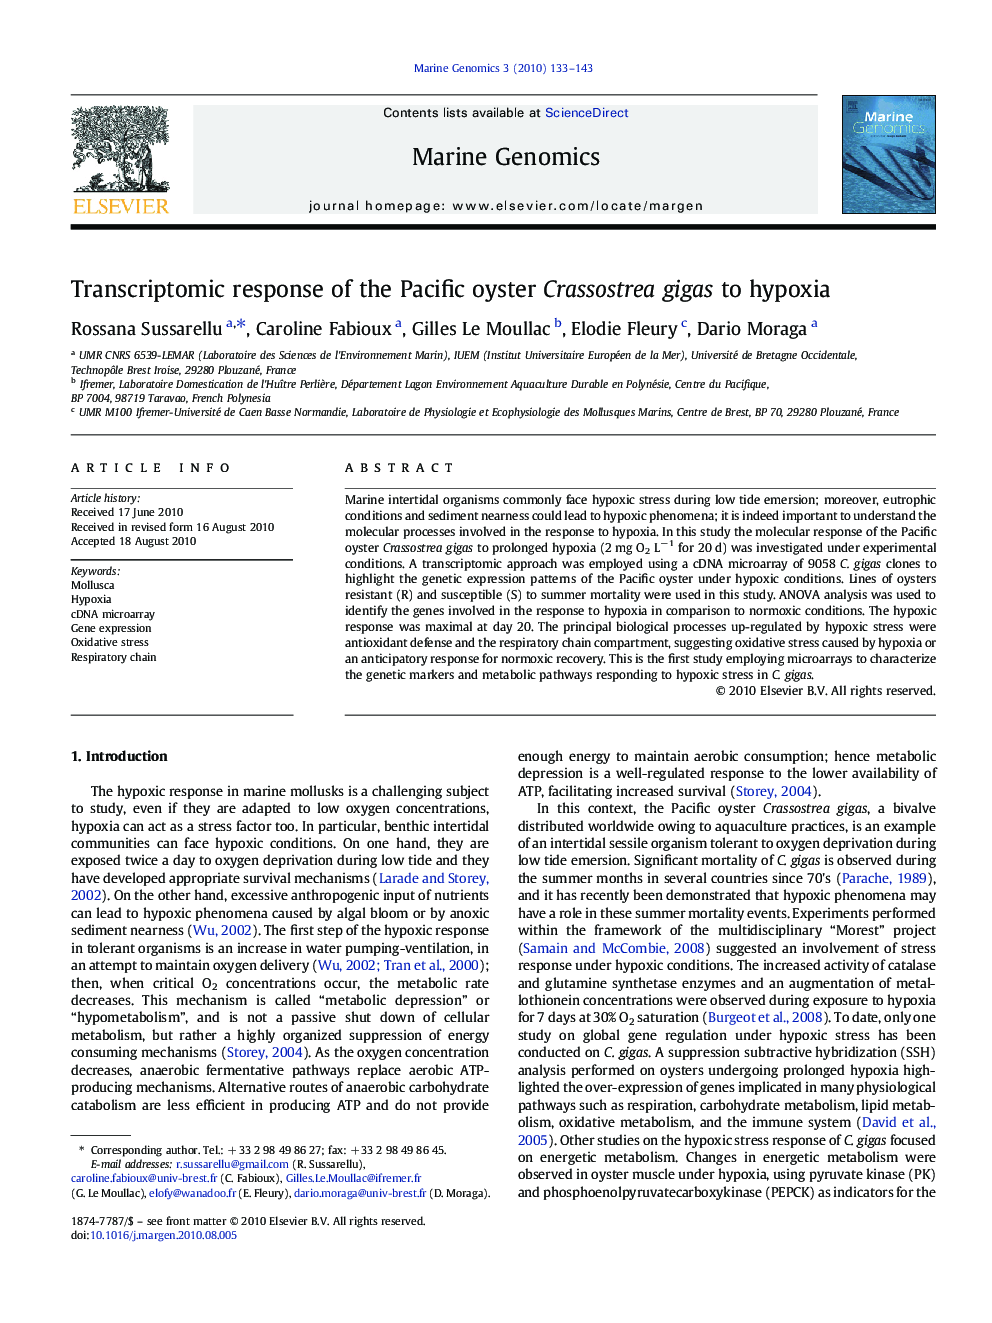 Transcriptomic response of the Pacific oyster Crassostrea gigas to hypoxia